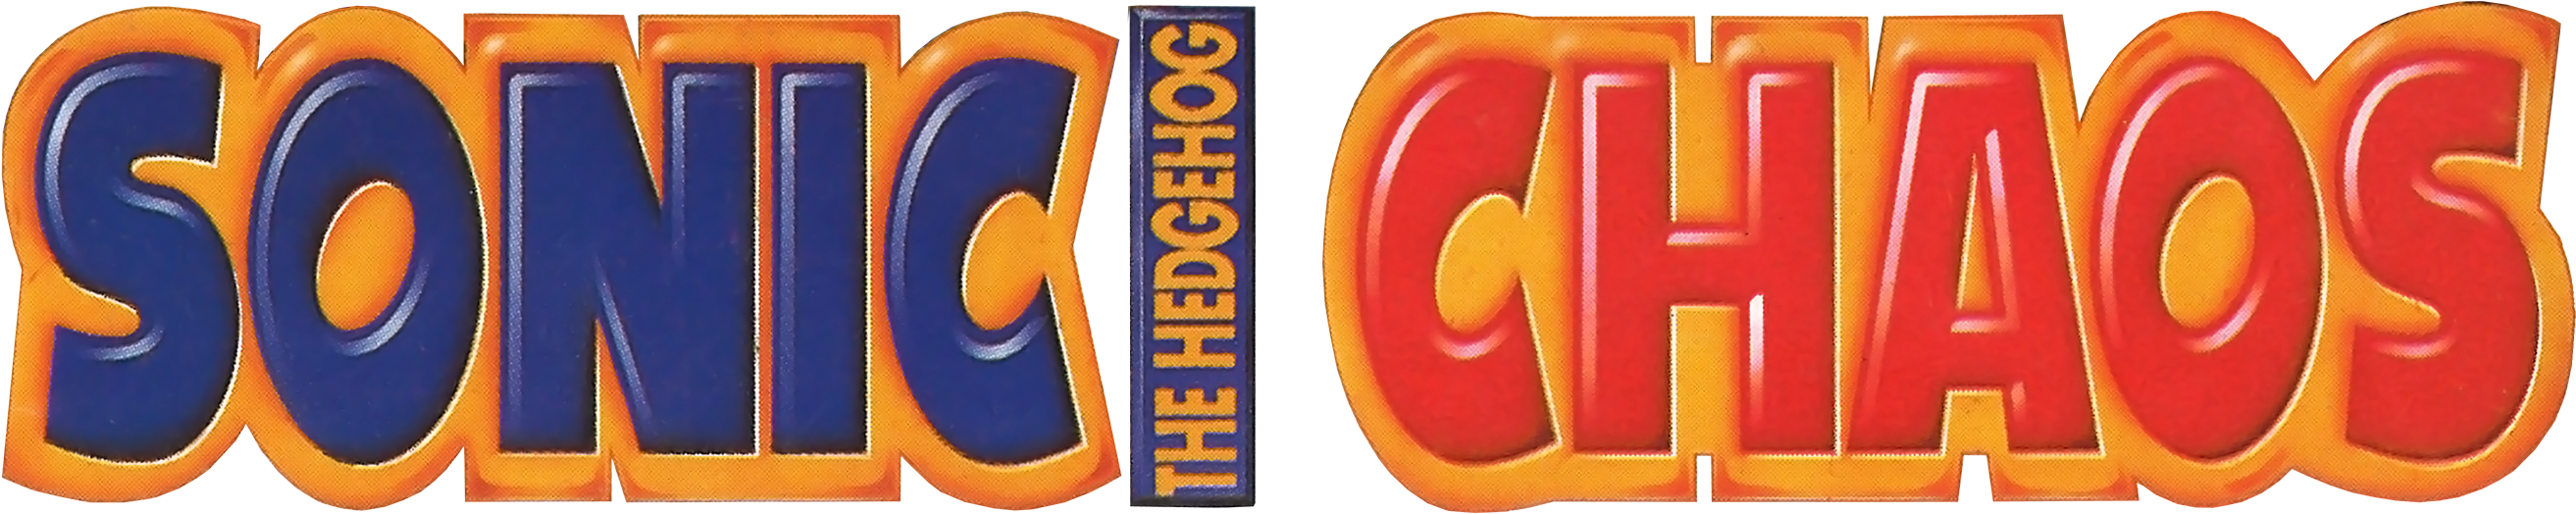 A Close Up Of A Logo